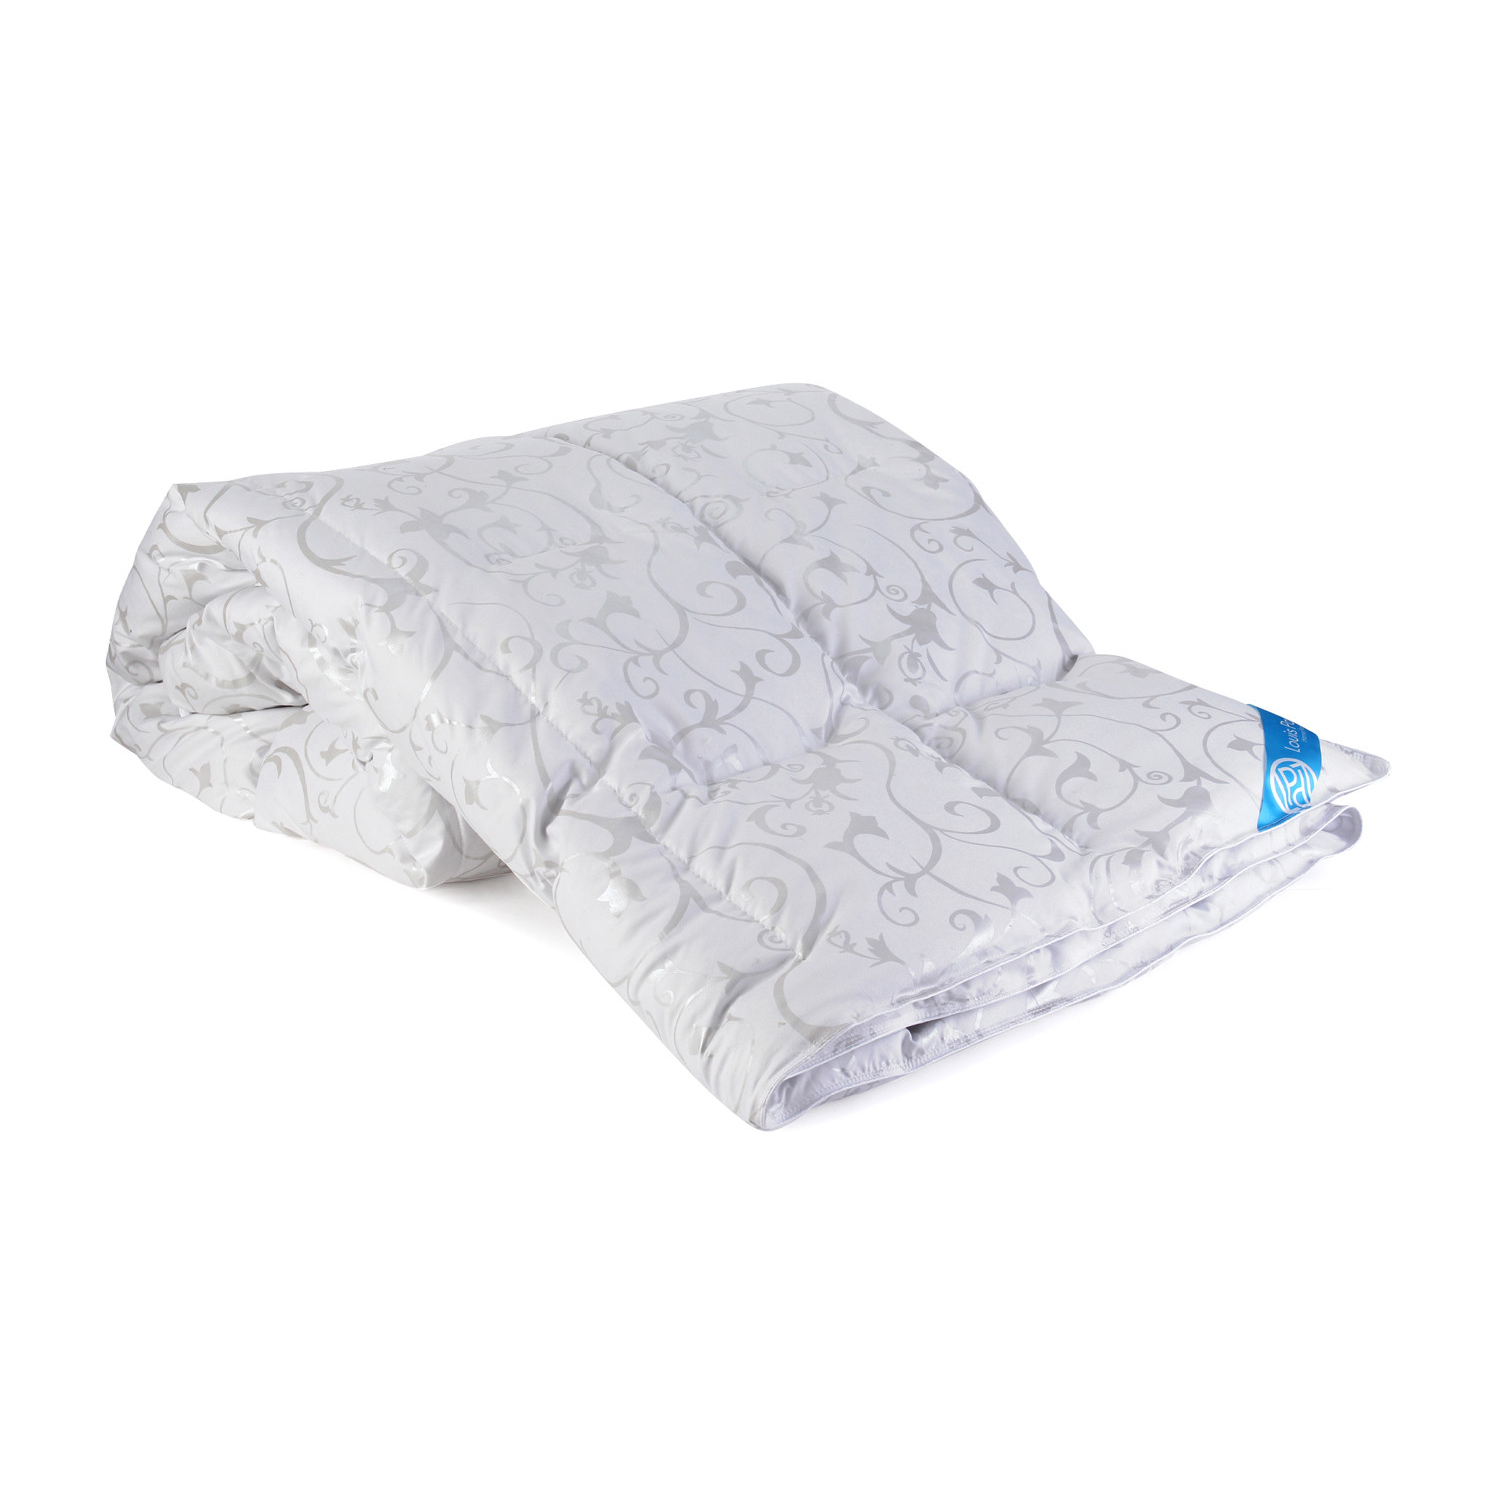 Пуховое одеяло Louis Pascal Эмма белое с серым 140х205 см (ЛП2066) пуховое одеяло marc anri la rochelle белое 140х205 см мн2011